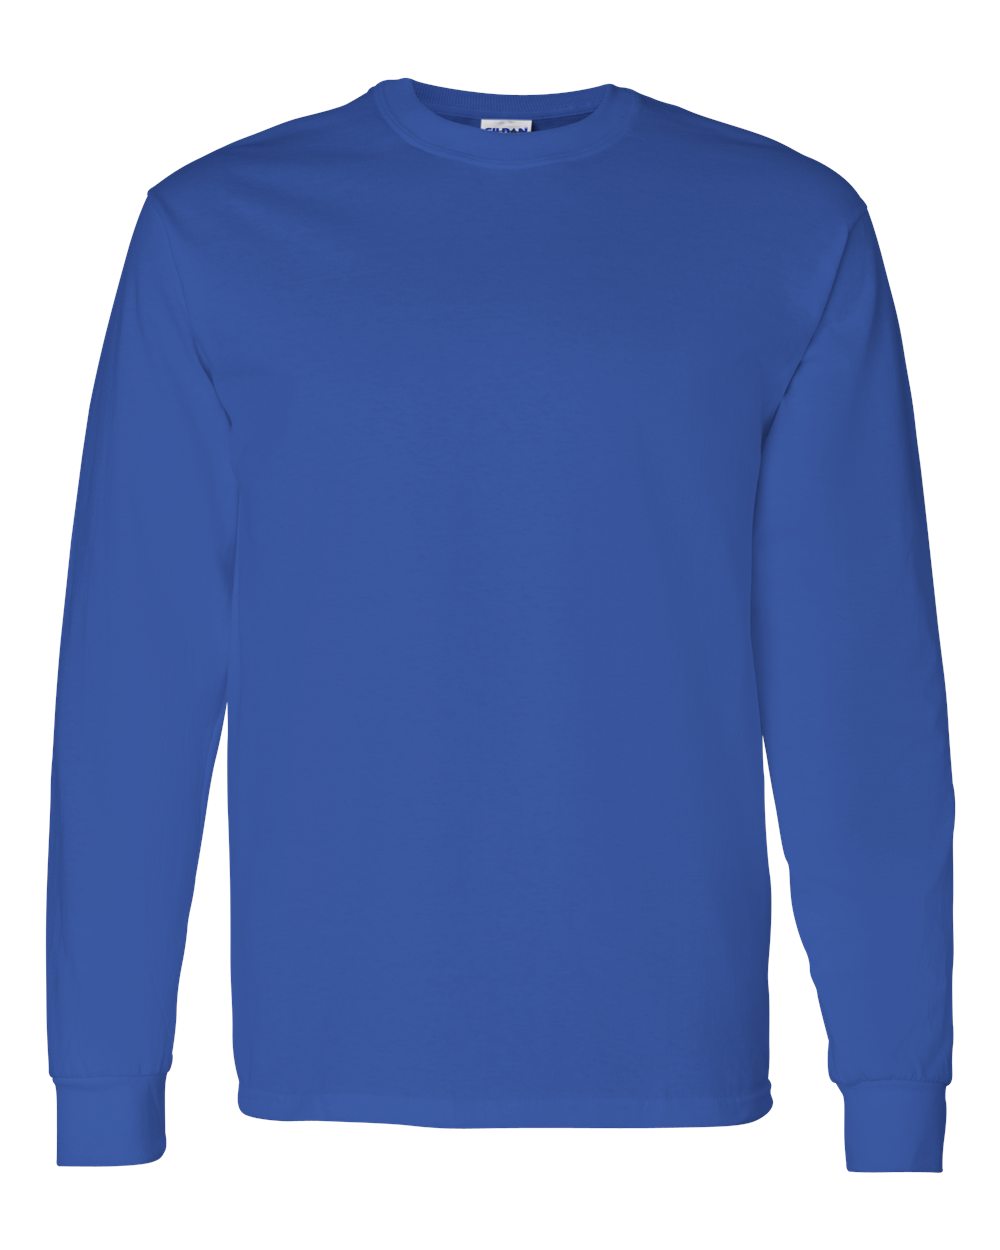 Pretreated Gildan 5400 Heavy Cotton Long Sleeve T-Shirt - Royal